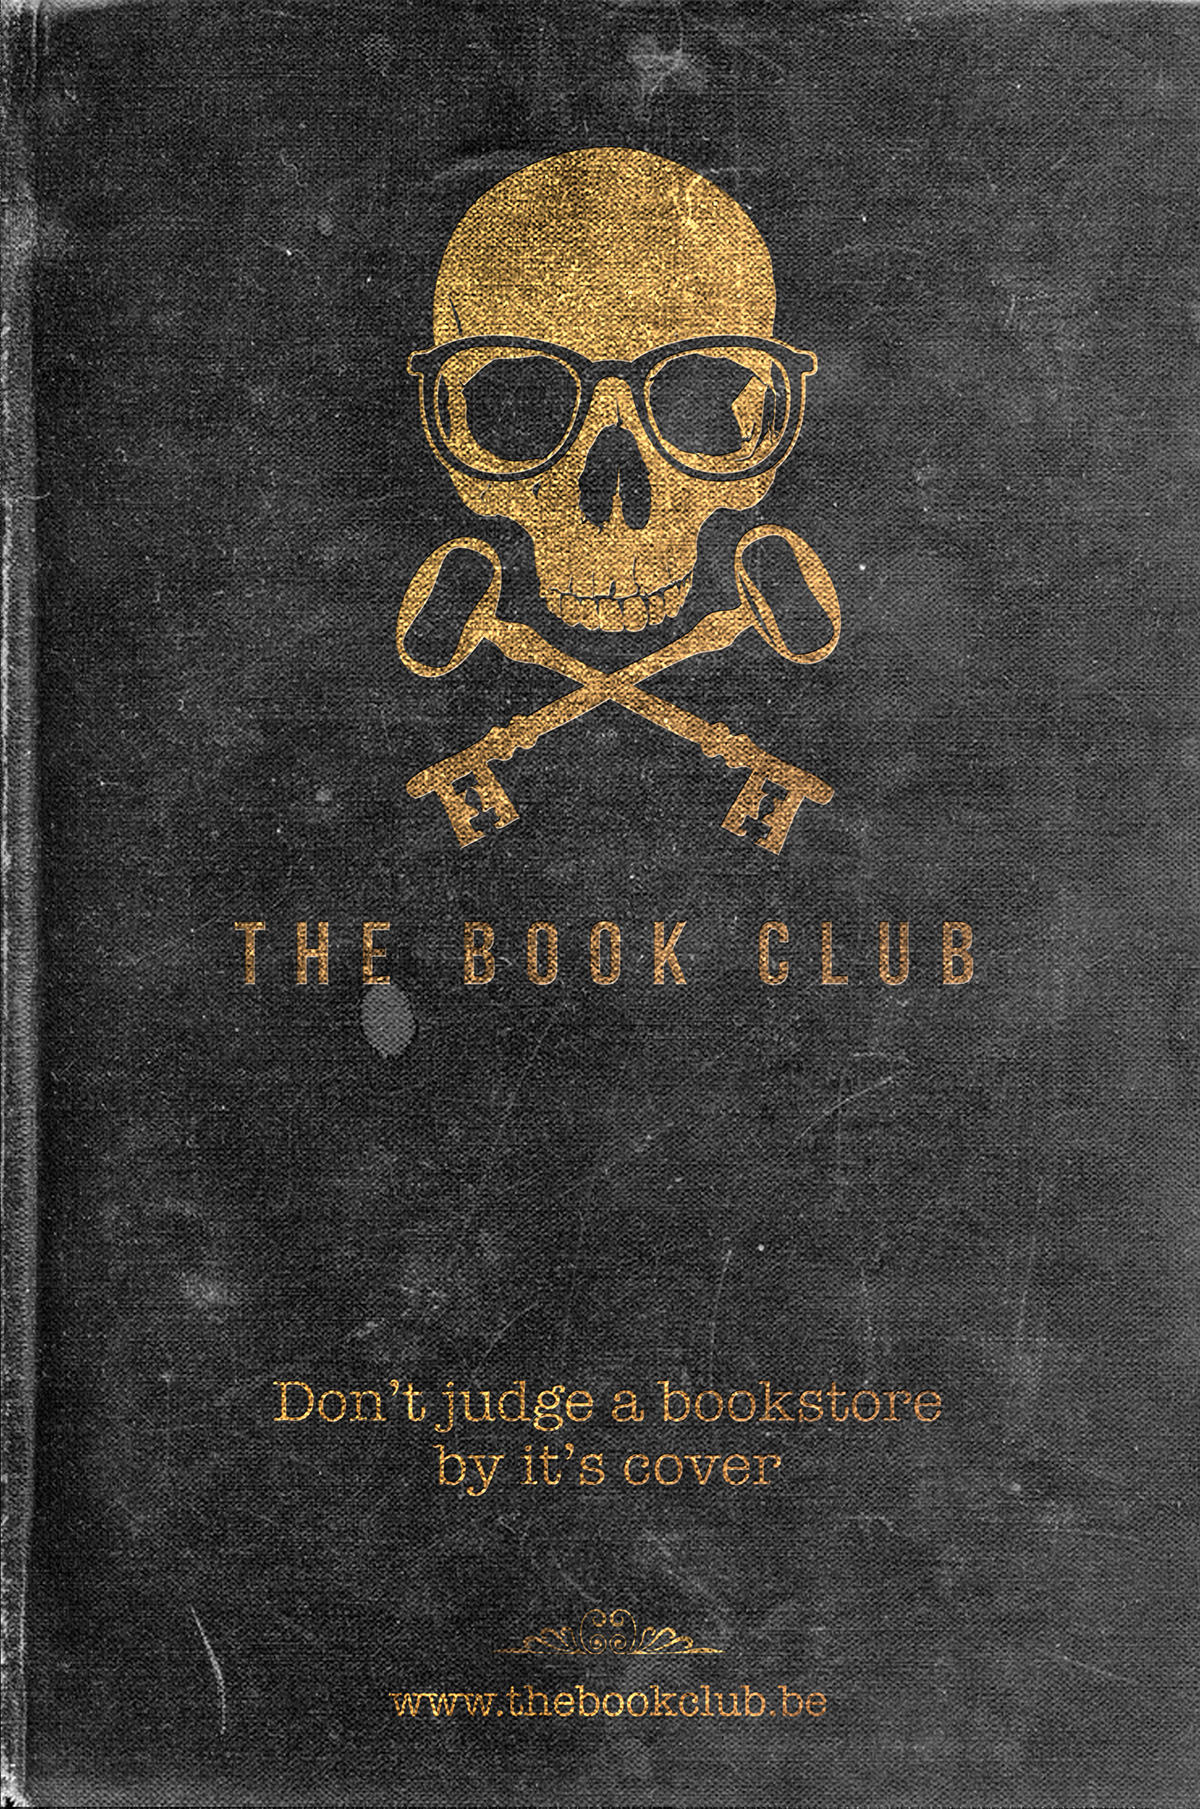 bacardi casa book club Bookclub books logo skull keys secret cover judge Hipster Rum drinks